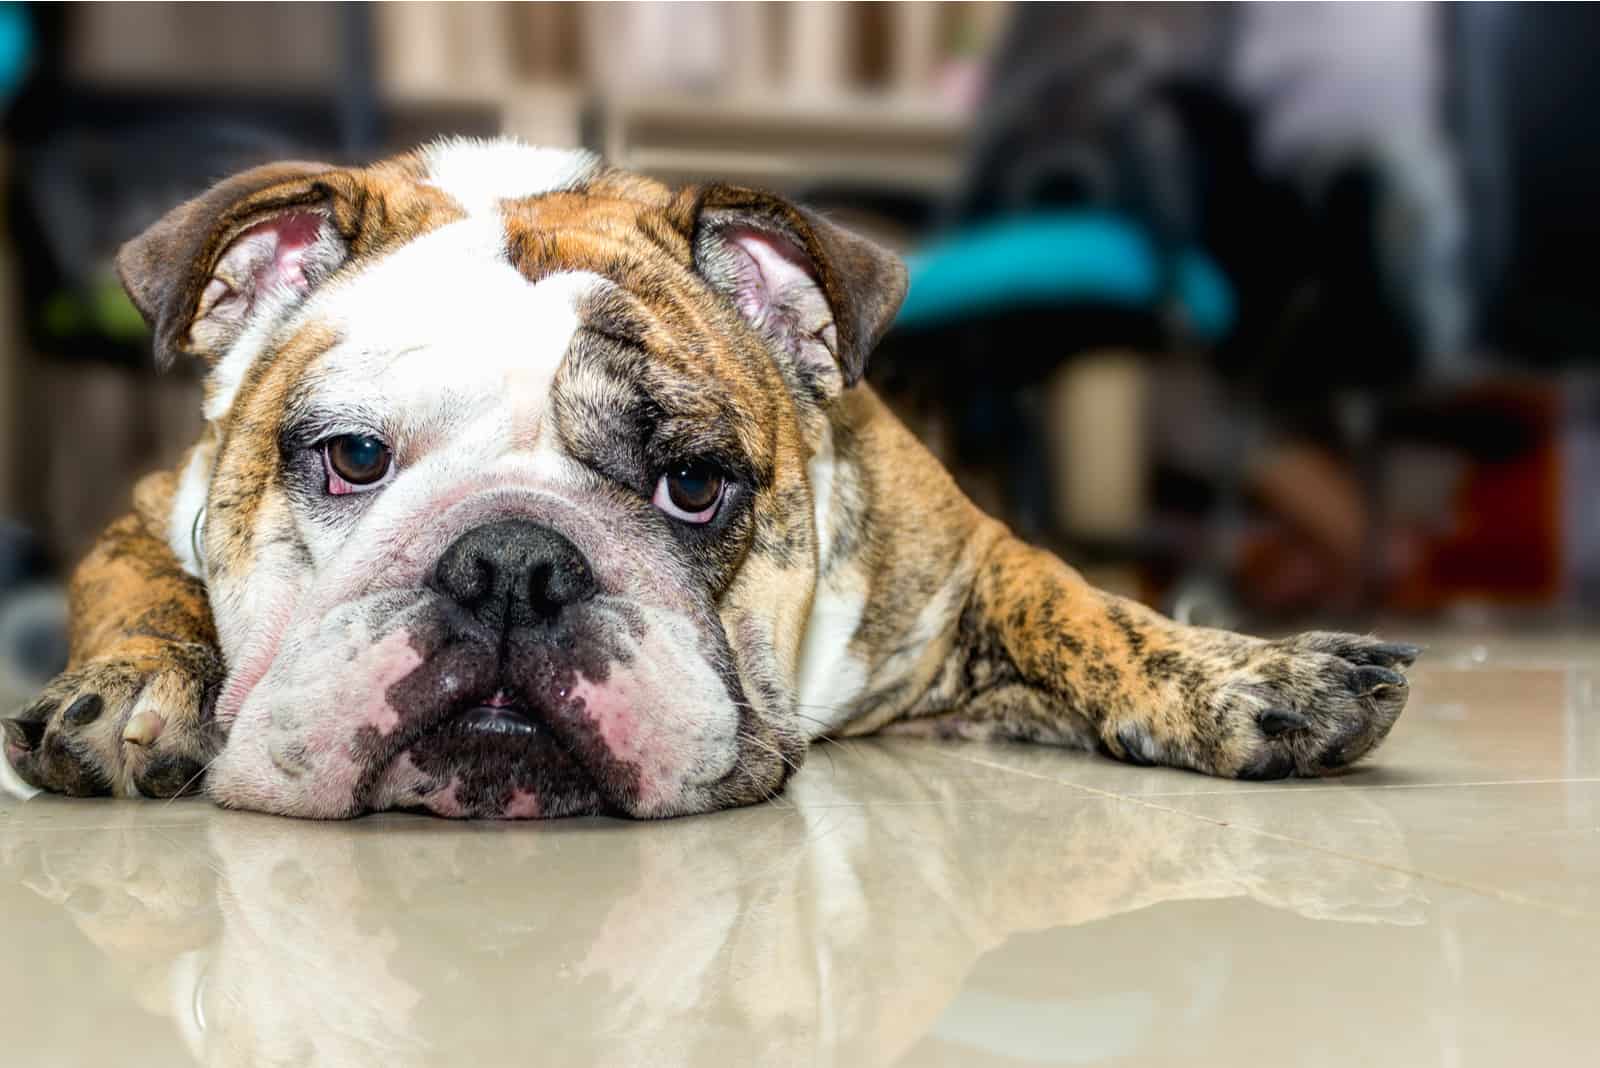 a sad English bulldog lies on the floor of the room